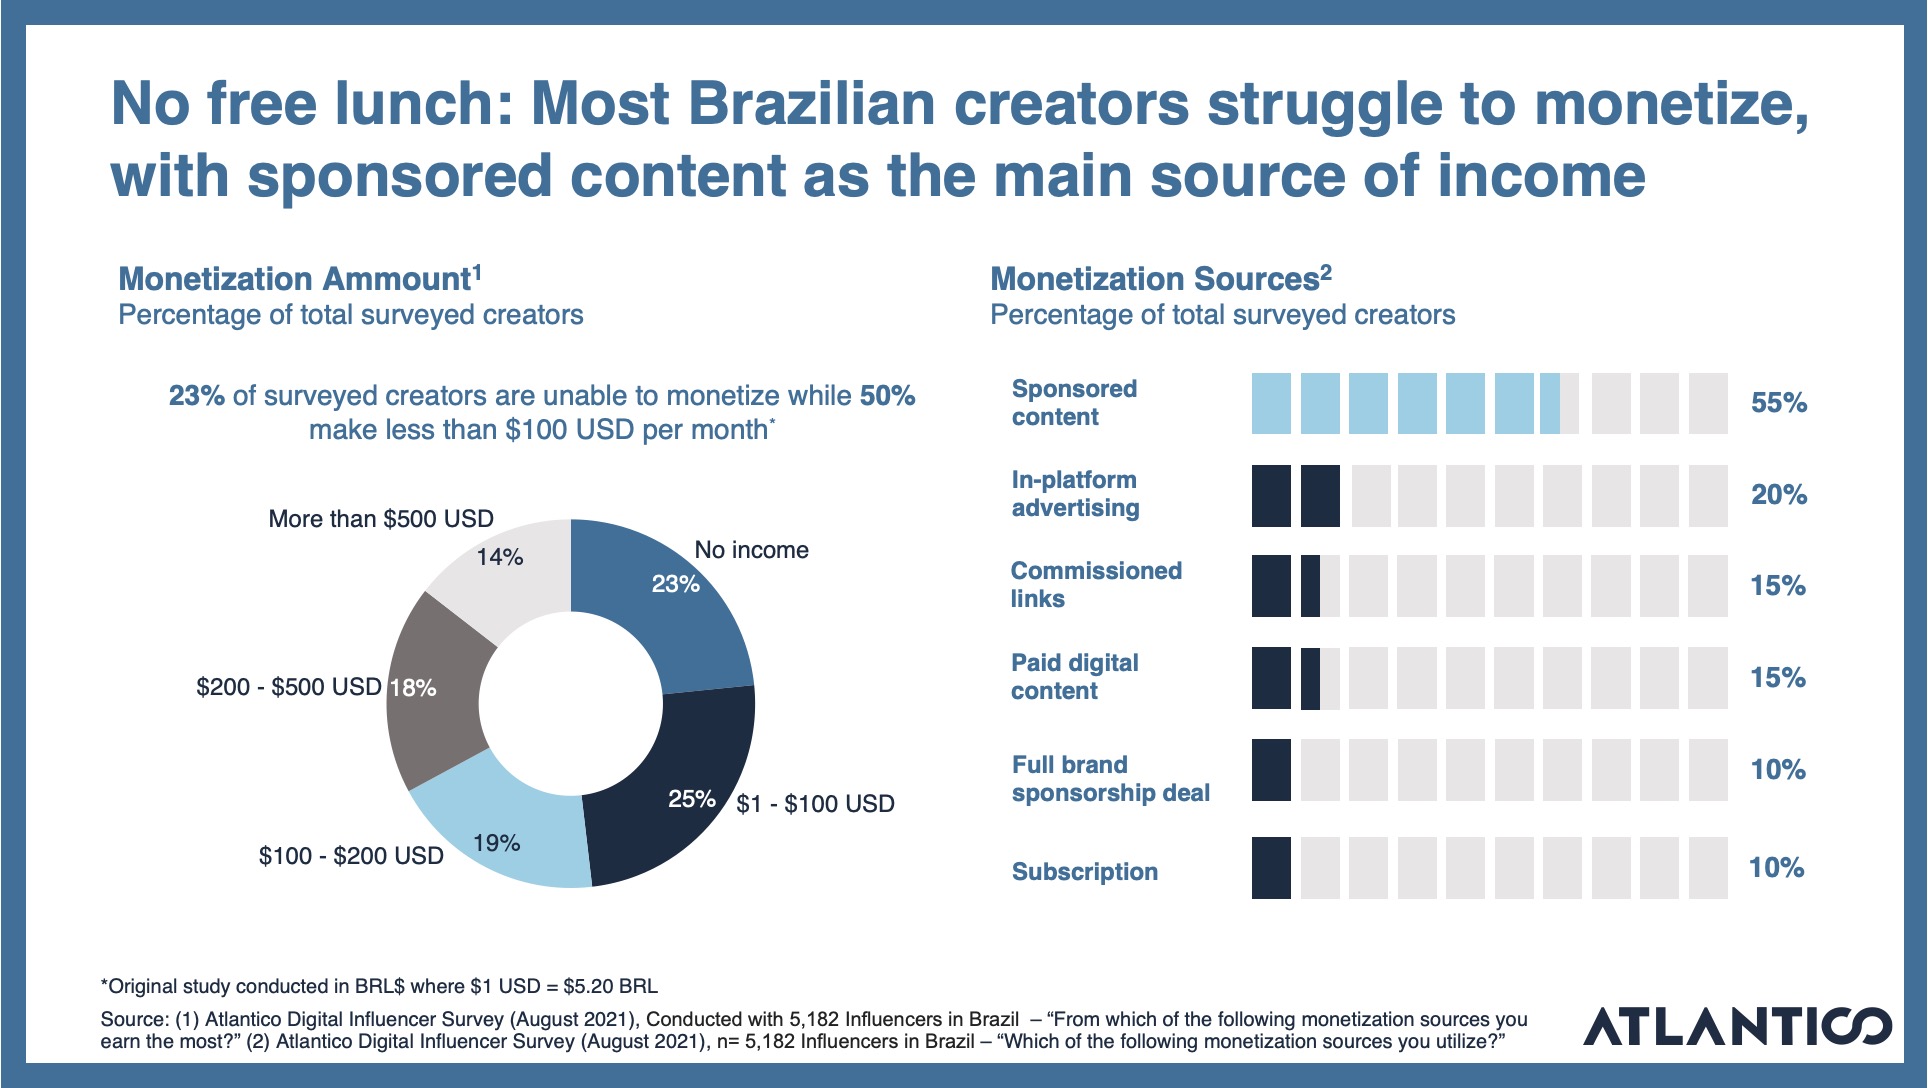 Creator monetization in Brazil survey.